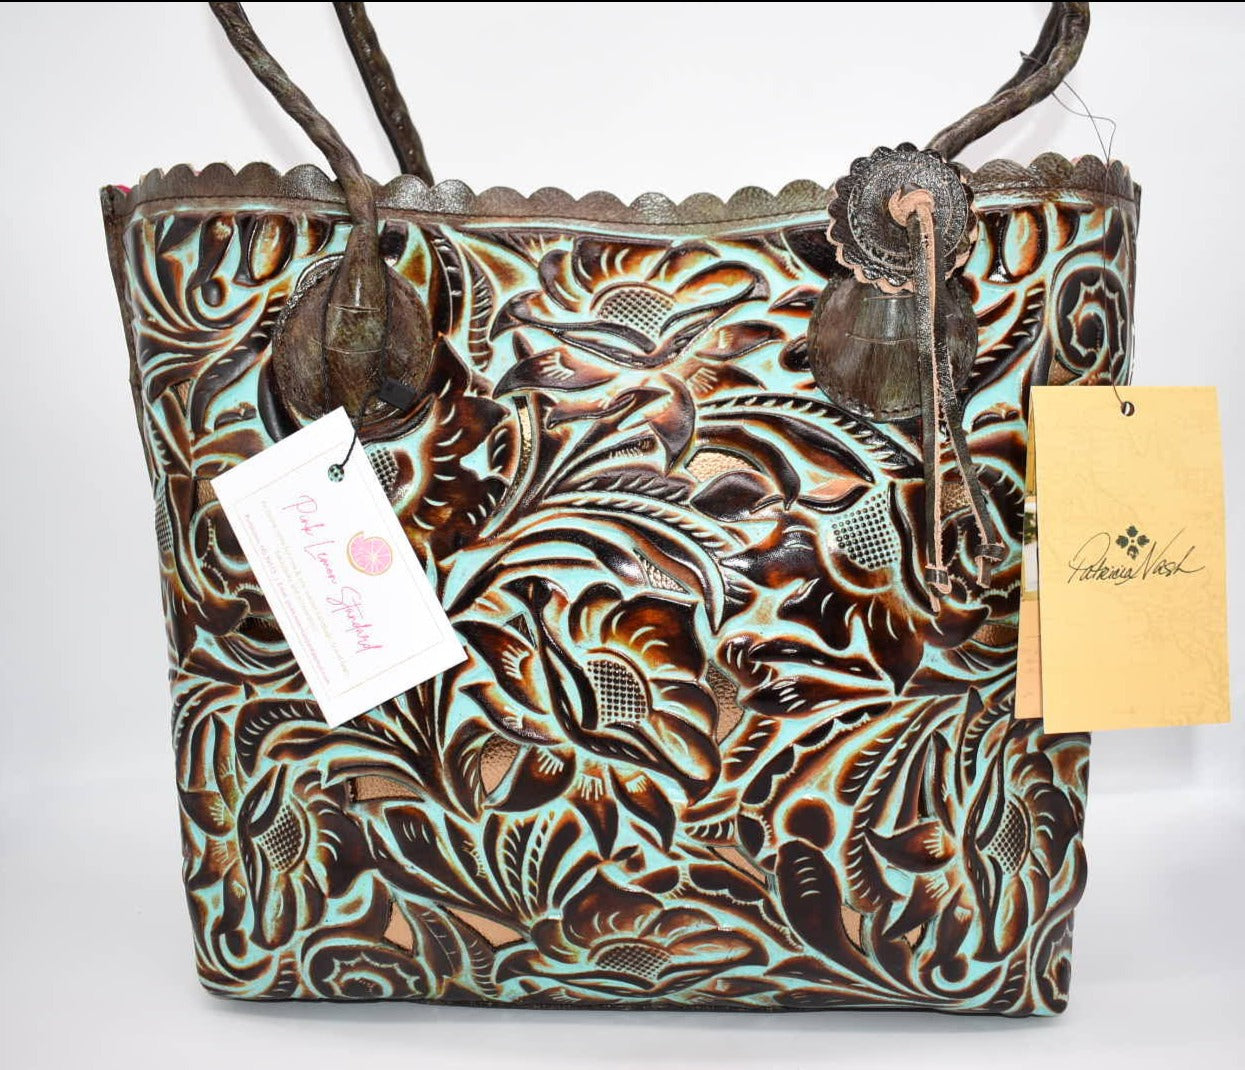 Patricia Nash Leather Estella Tote Bag in Tooled Turquoise